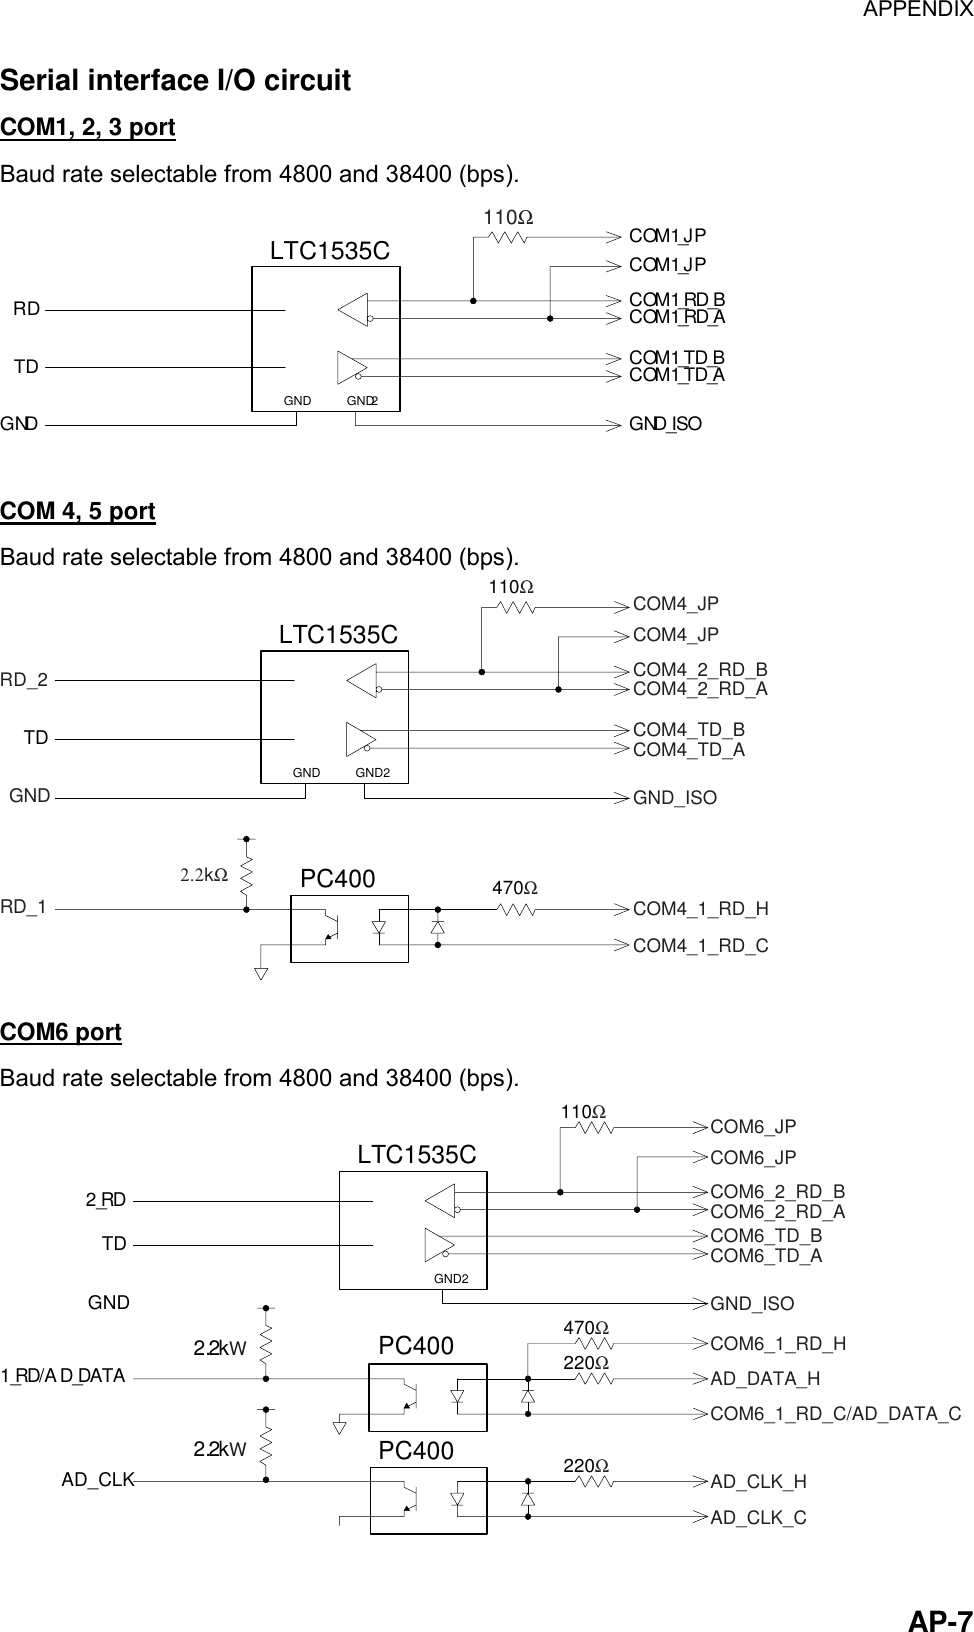 APPENDIX  AP-7Serial interface I/O circuit COM1, 2, 3 port Baud rate selectable from 4800 and 38400 (bps). LTC1535CCOM1_RD_BCOM1_RD_ACOM1_TD_BCOM1_TD_AGND_ISOGND2GNDCOM1_JPCOM1_JPRDTDGND110Ω  COM 4, 5 port Baud rate selectable from 4800 and 38400 (bps). LTC1535C110ΩGND2GNDTD470ΩPC400COM4_JPCOM4_JPCOM4_2_RD_BCOM4_2_RD_ACOM4_TD_BCOM4_TD_AGND_ISOCOM4_1_RD_HCOM4_1_RD_C2.2kΩRD_2GNDRD_1  COM6 port Baud rate selectable from 4800 and 38400 (bps). LTC1535C110ΩGND22_RDTDGND220ΩPC4002.2kW1_RD/A D_DATA220ΩPC400AD_CLK470Ω2.2kWCOM6_JPCOM6_JPCOM6_2_RD_BCOM6_2_RD_ACOM6_TD_BCOM6_TD_AGND_ISOCOM6_1_RD_HAD_DATA_HCOM6_1_RD_C/AD_DATA_CAD_CLK_HAD_CLK_C 